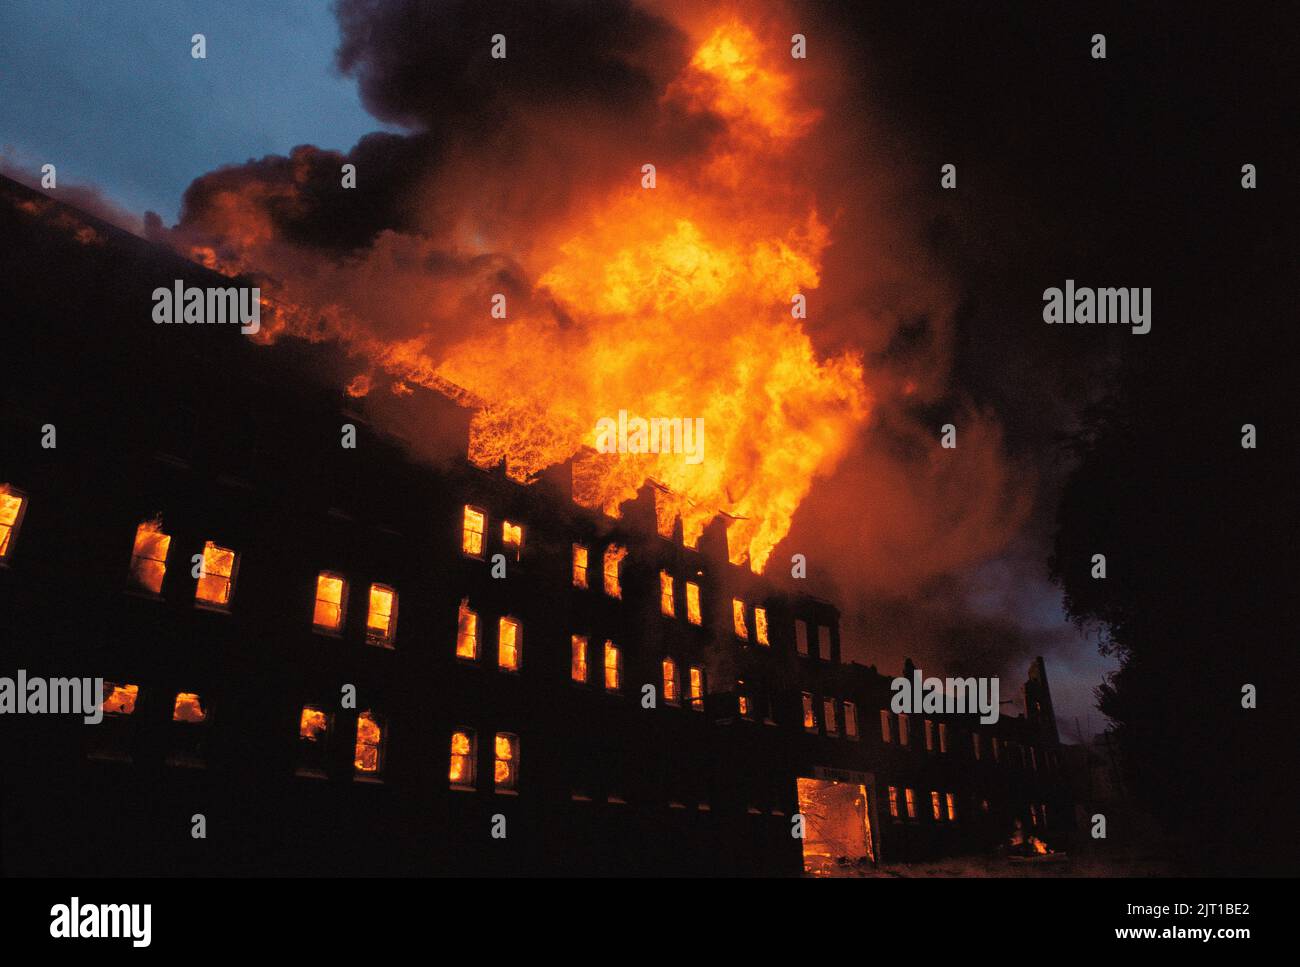 Australia. Sydney. Redfern. Burning industrial warehouse building. Stock Photo